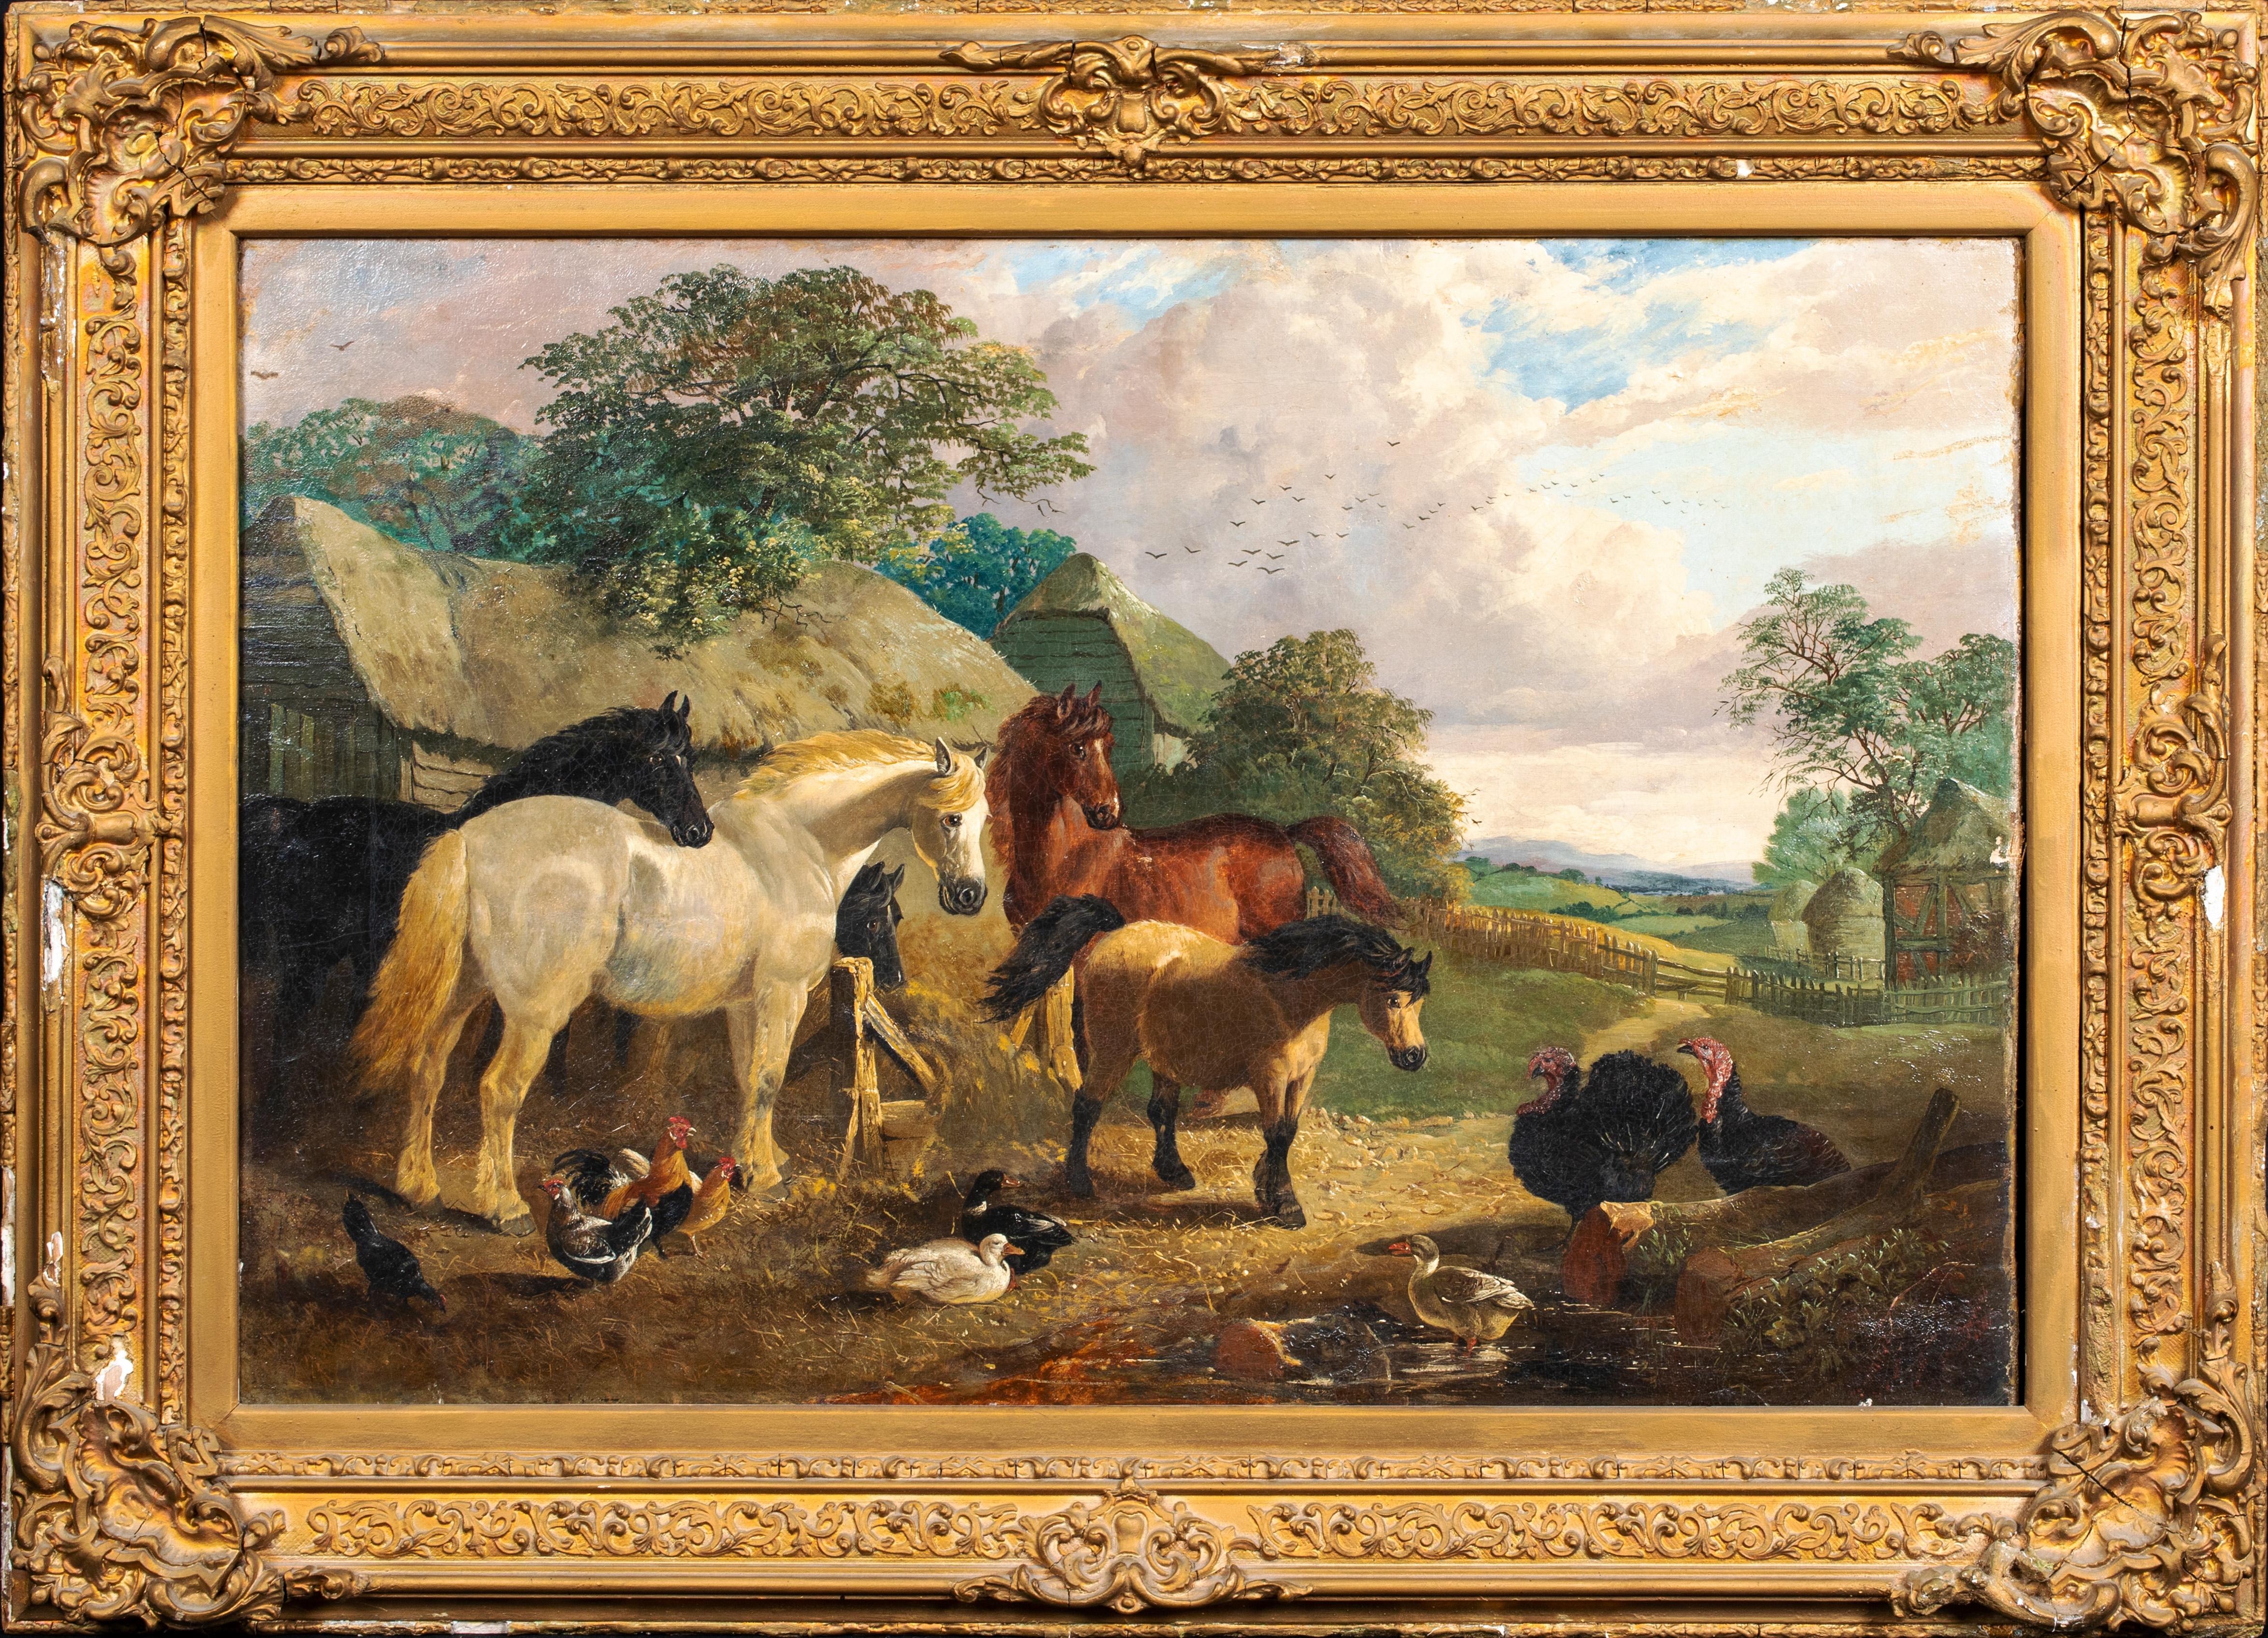 John Frederick Herring Jr. Portrait Painting - The Farmyard, Horses, Ducks, Turkeys and Chickens, 19th Century  